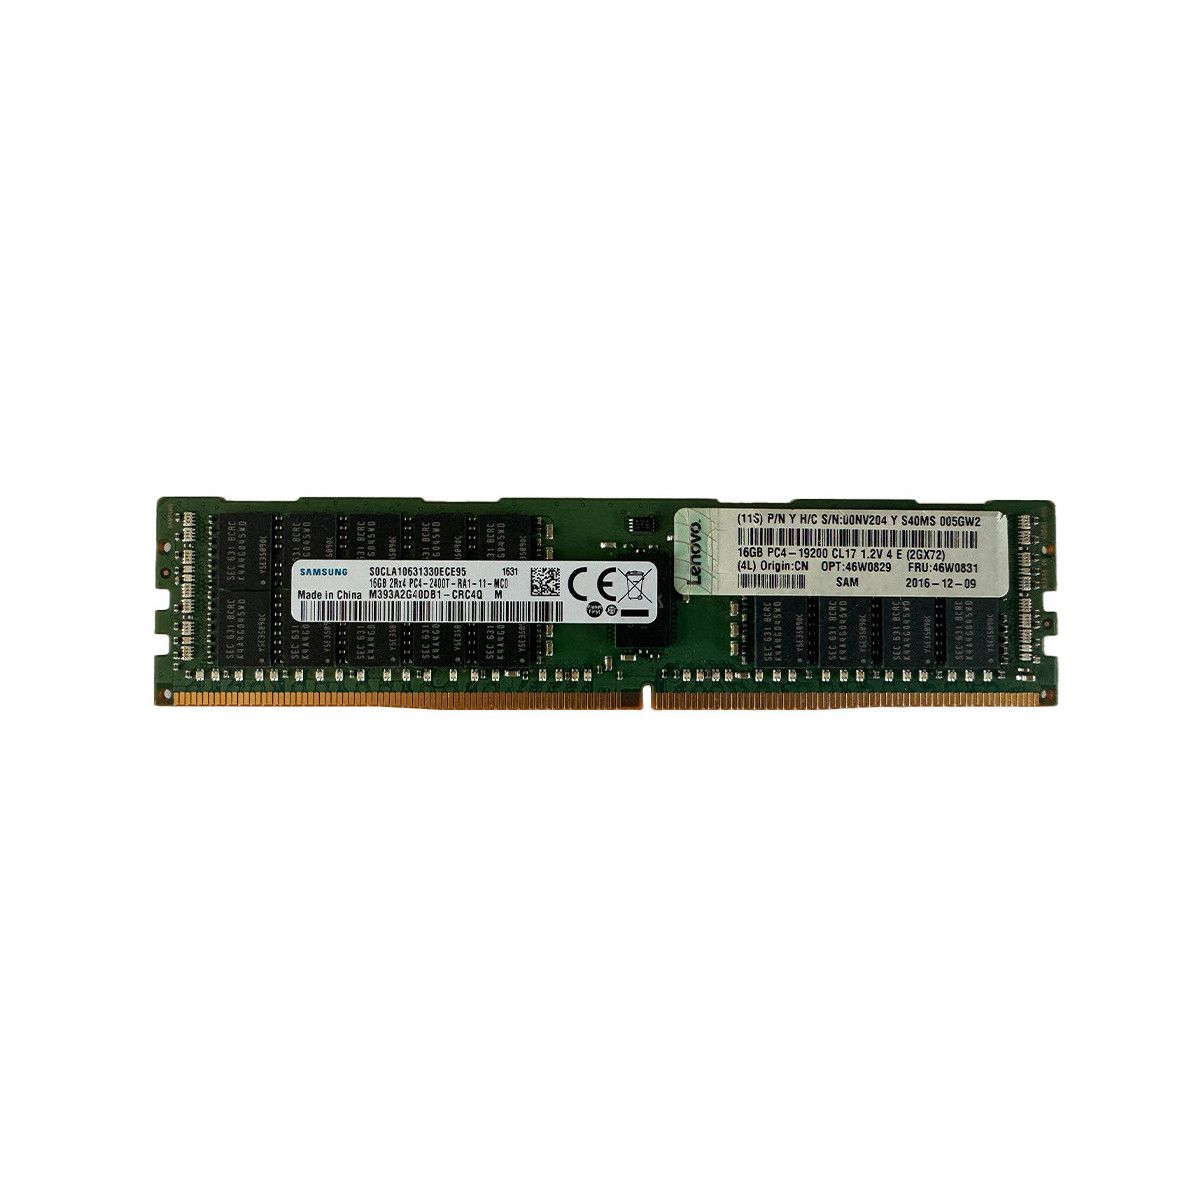 A8797578-MS - Memstar 1x 16GB DDR4-2400 RDIMM PC4-19200T-R - Mem-Star Compatible OEM Memory 1 - Memstar 